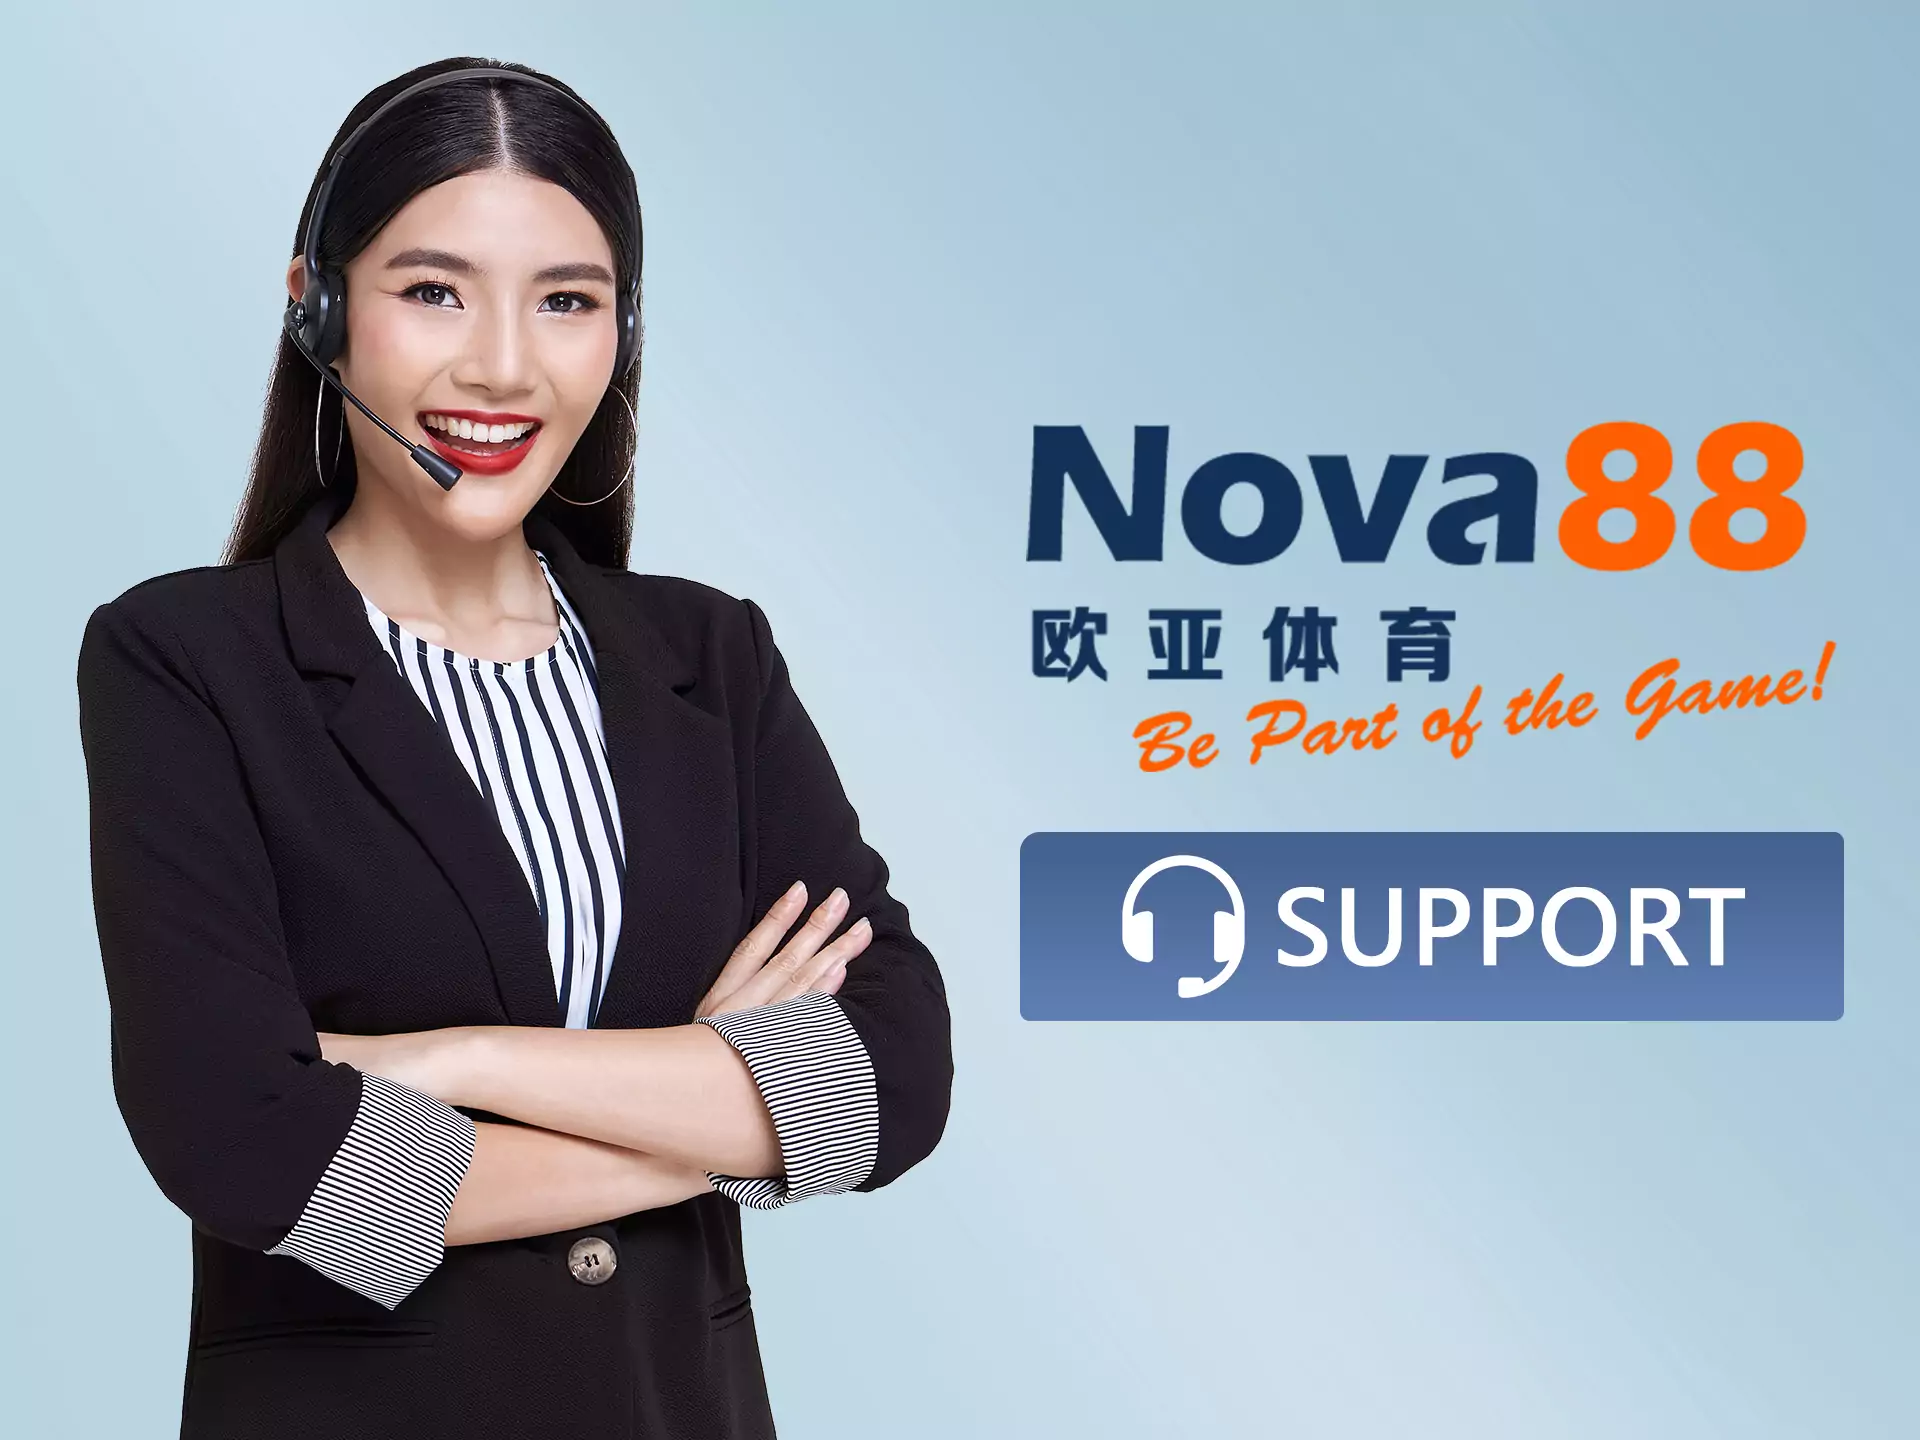 Ask for support in live format in Nova88 app.